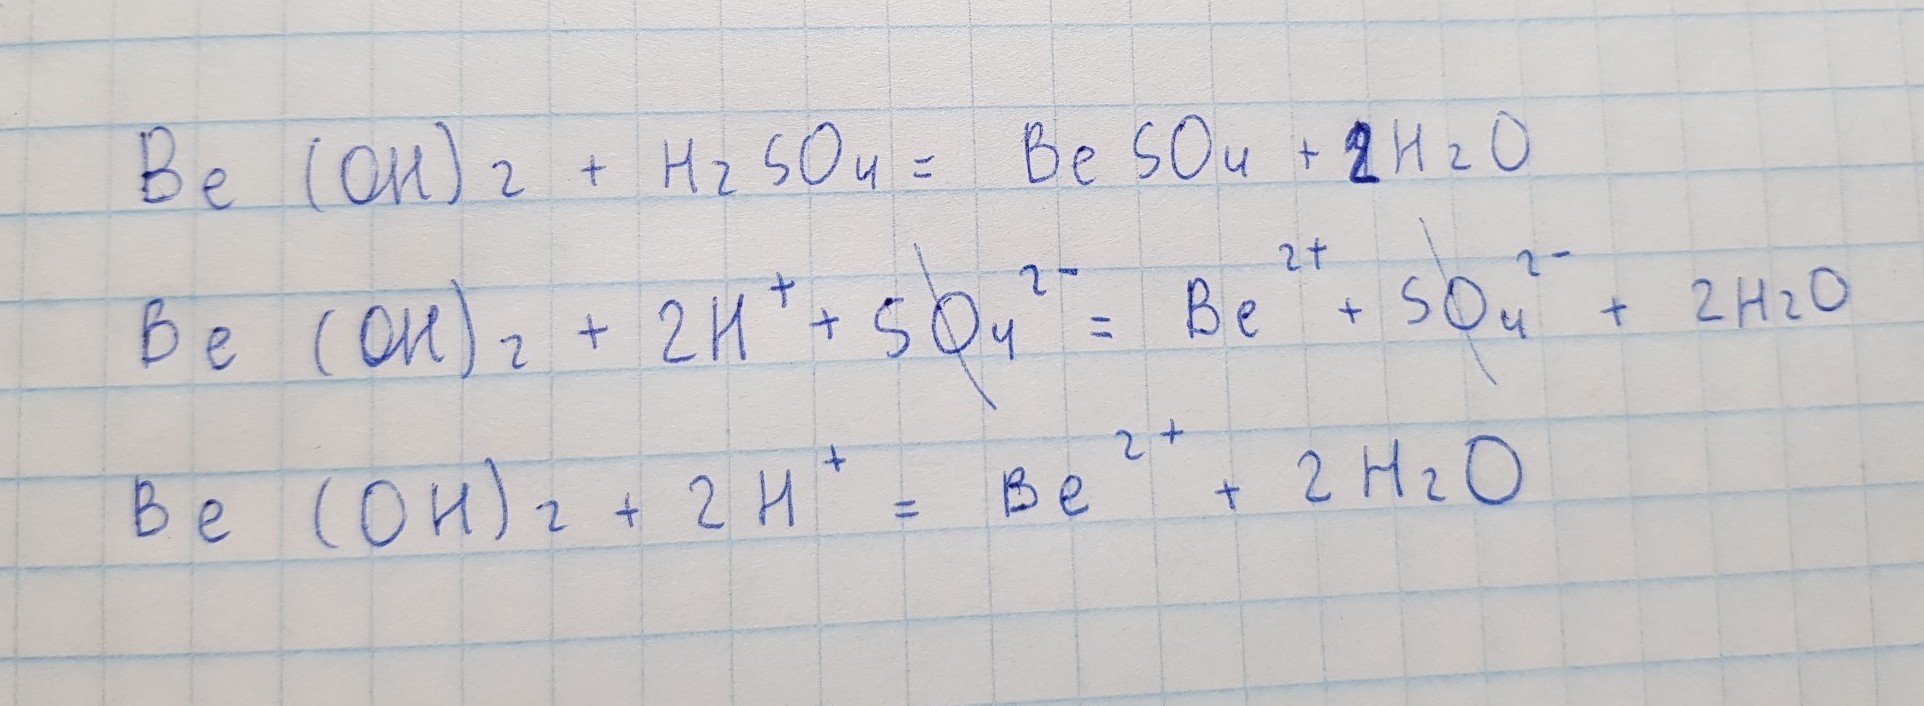 Beo ba oh 2. Beo+h2so4 ионное уравнение. Be(Oh)2 + h2so4 =beso4 + 2h2o ионное уравнение. H2so4 beo уравнение. Beo+h2so3.